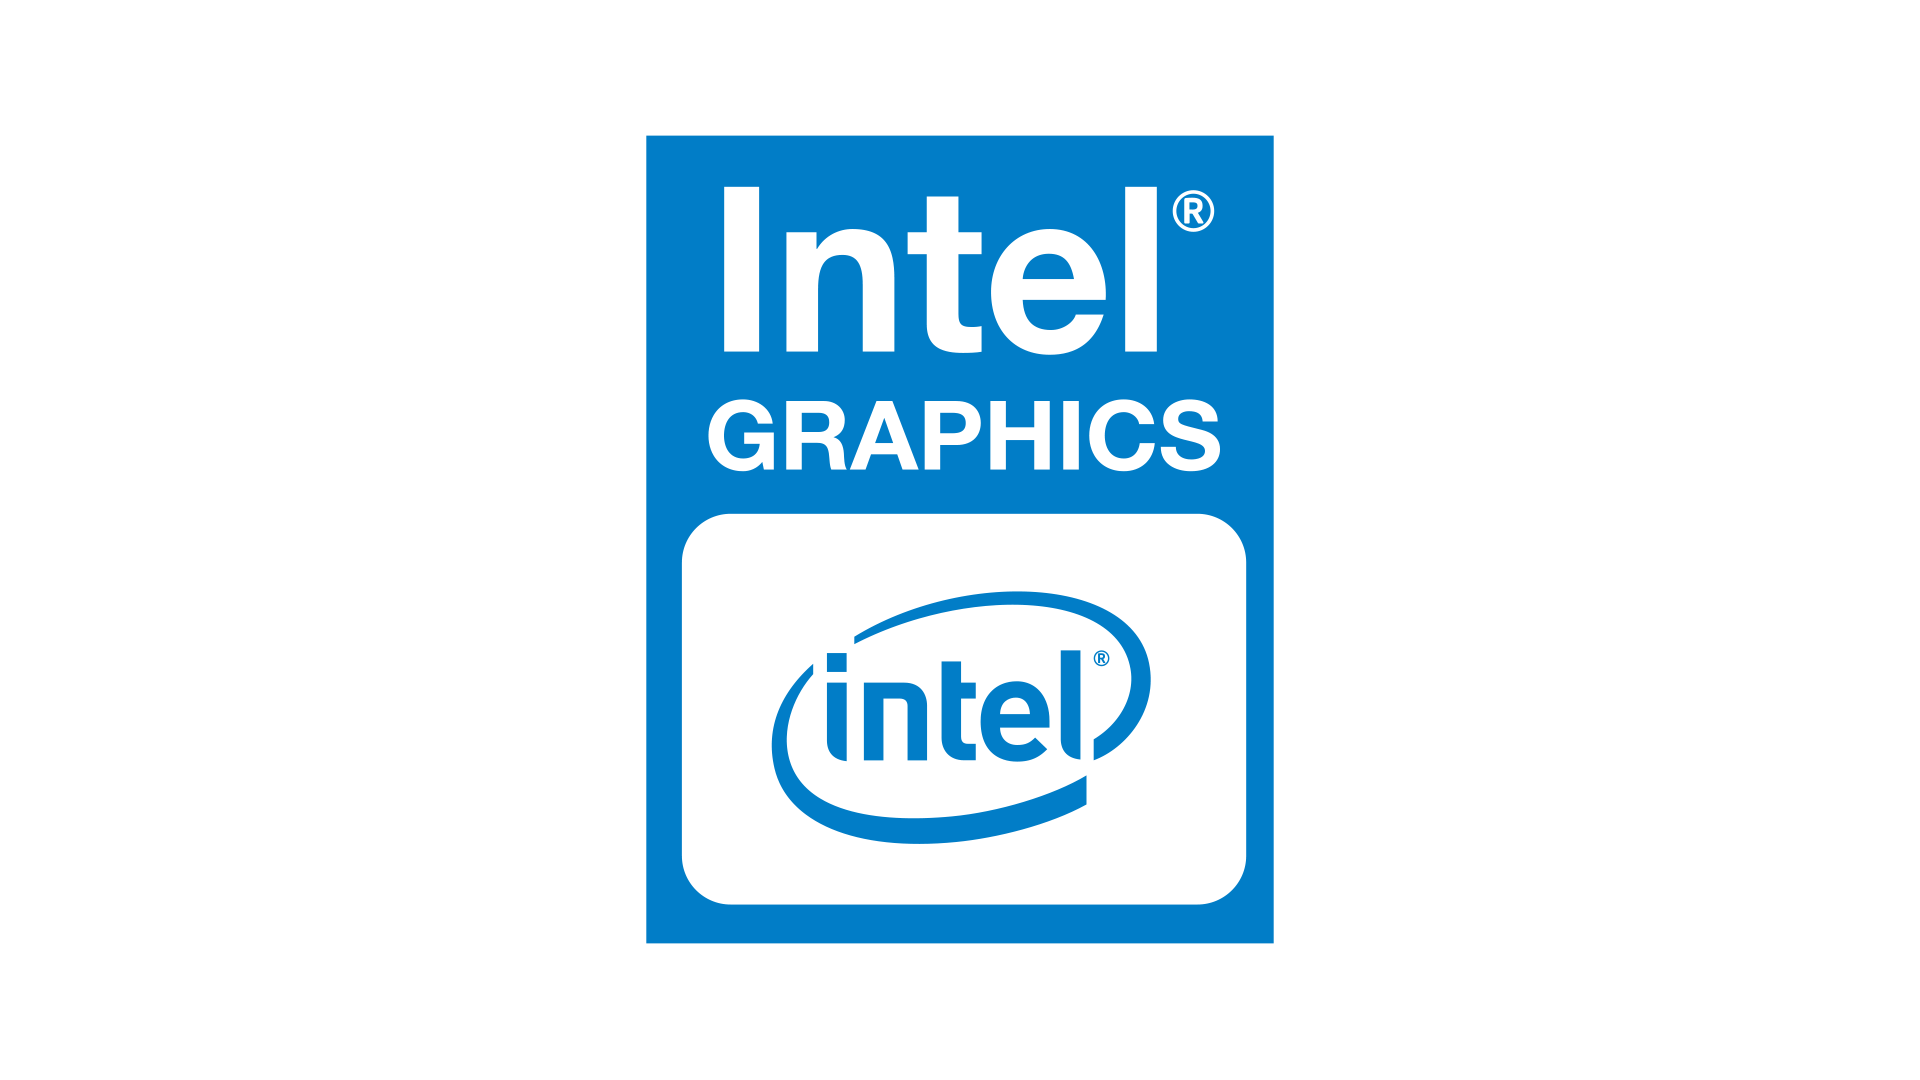 Intel core graphics driver. Интел драйвера. Intel Graphics. Intel Graphics Driver.